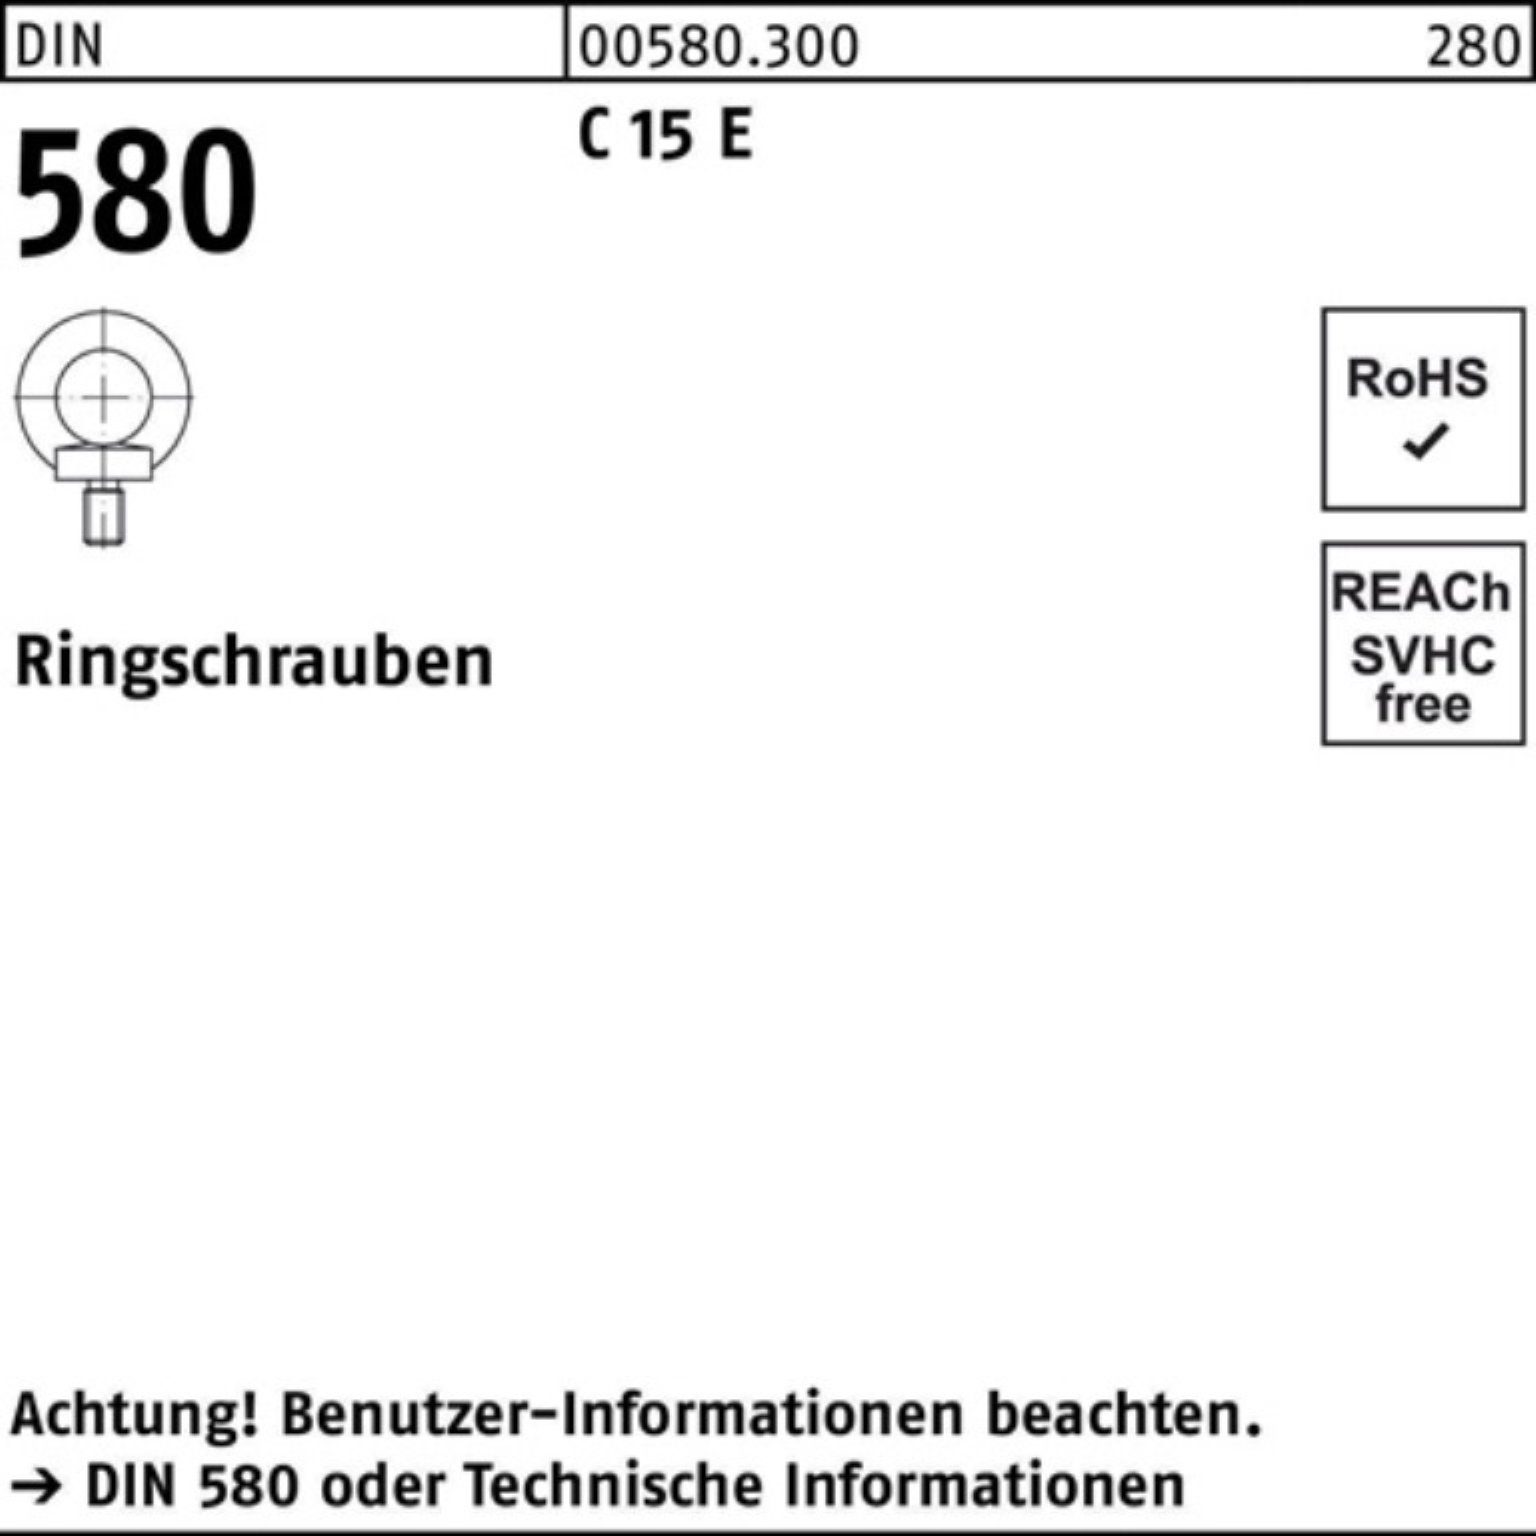 Stück Ringschraube C DIN 25 100er 580 E 580 Schraube Reyher C Rin DIN E M6 Pack 15 15